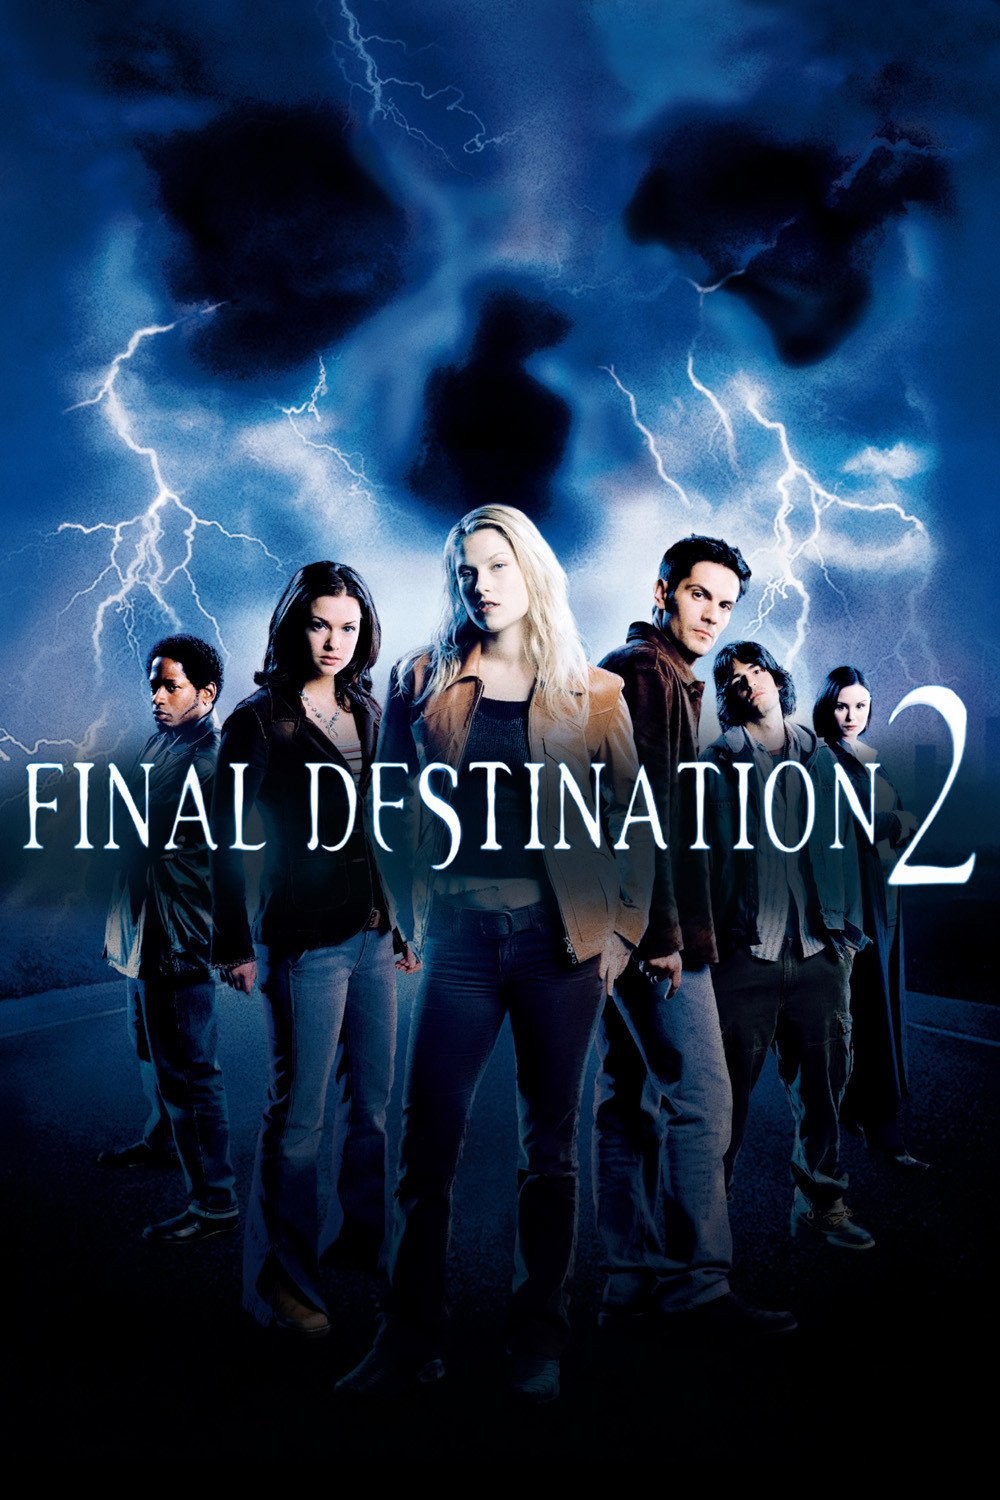 Final destination 3 full movie